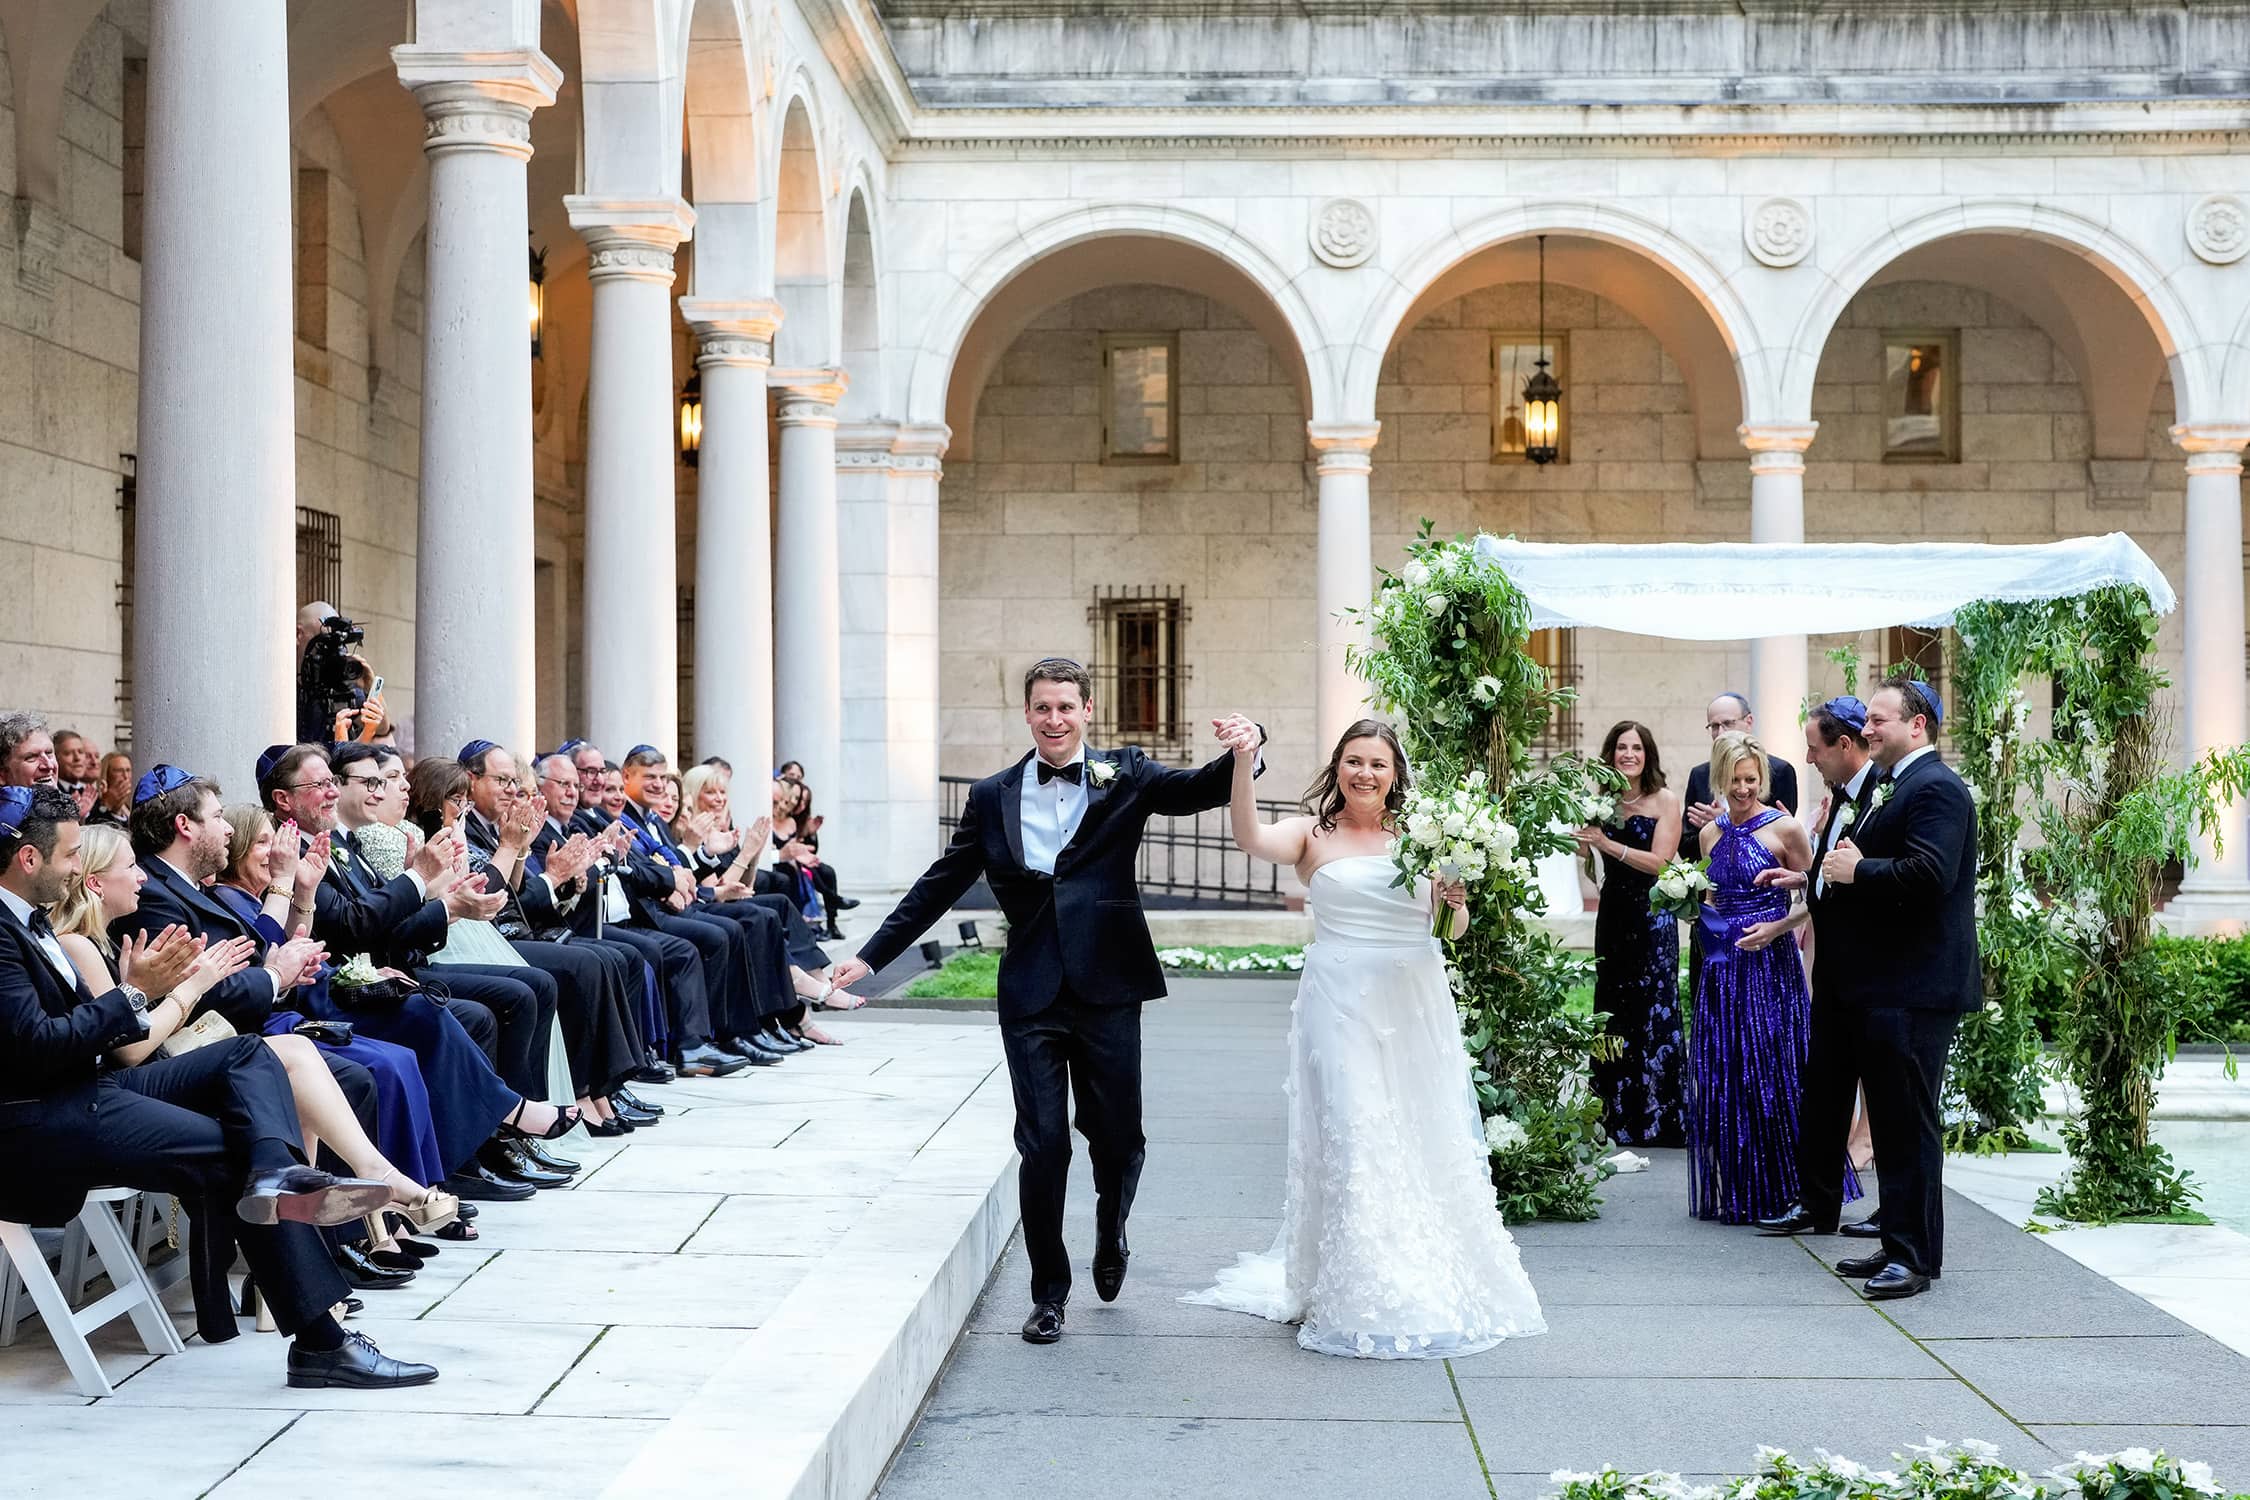 Boston Public Library Wedding with Courtyard Ceremony: Lauren & Scott